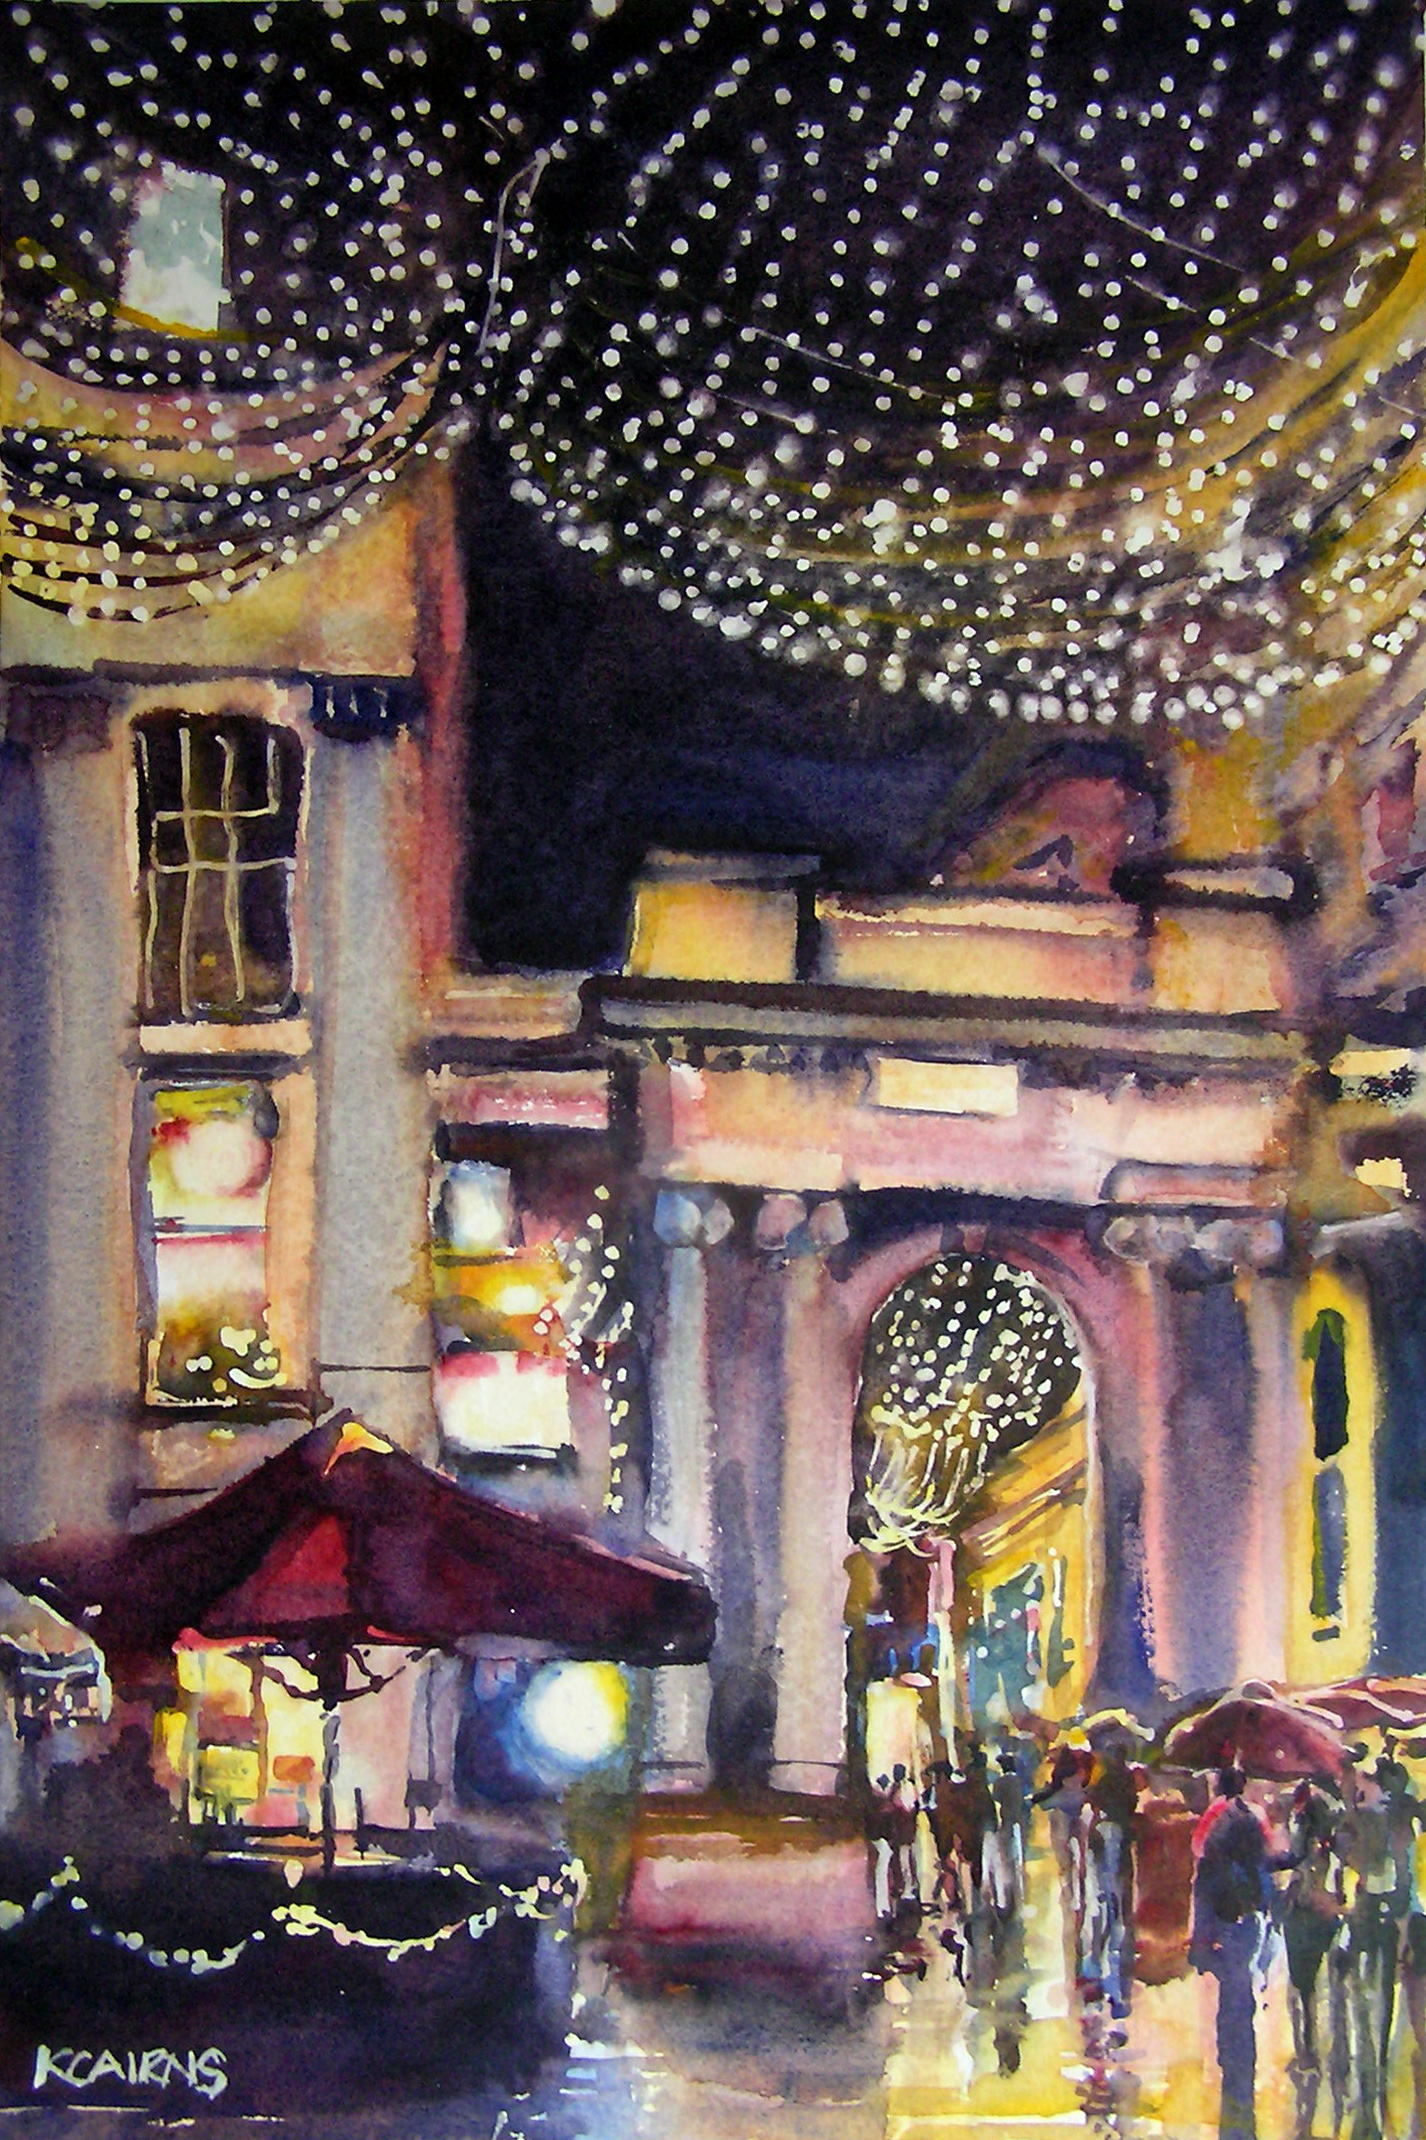 'Sparklers and Umbrellas, Exchange Square' by artist Karen Cairns